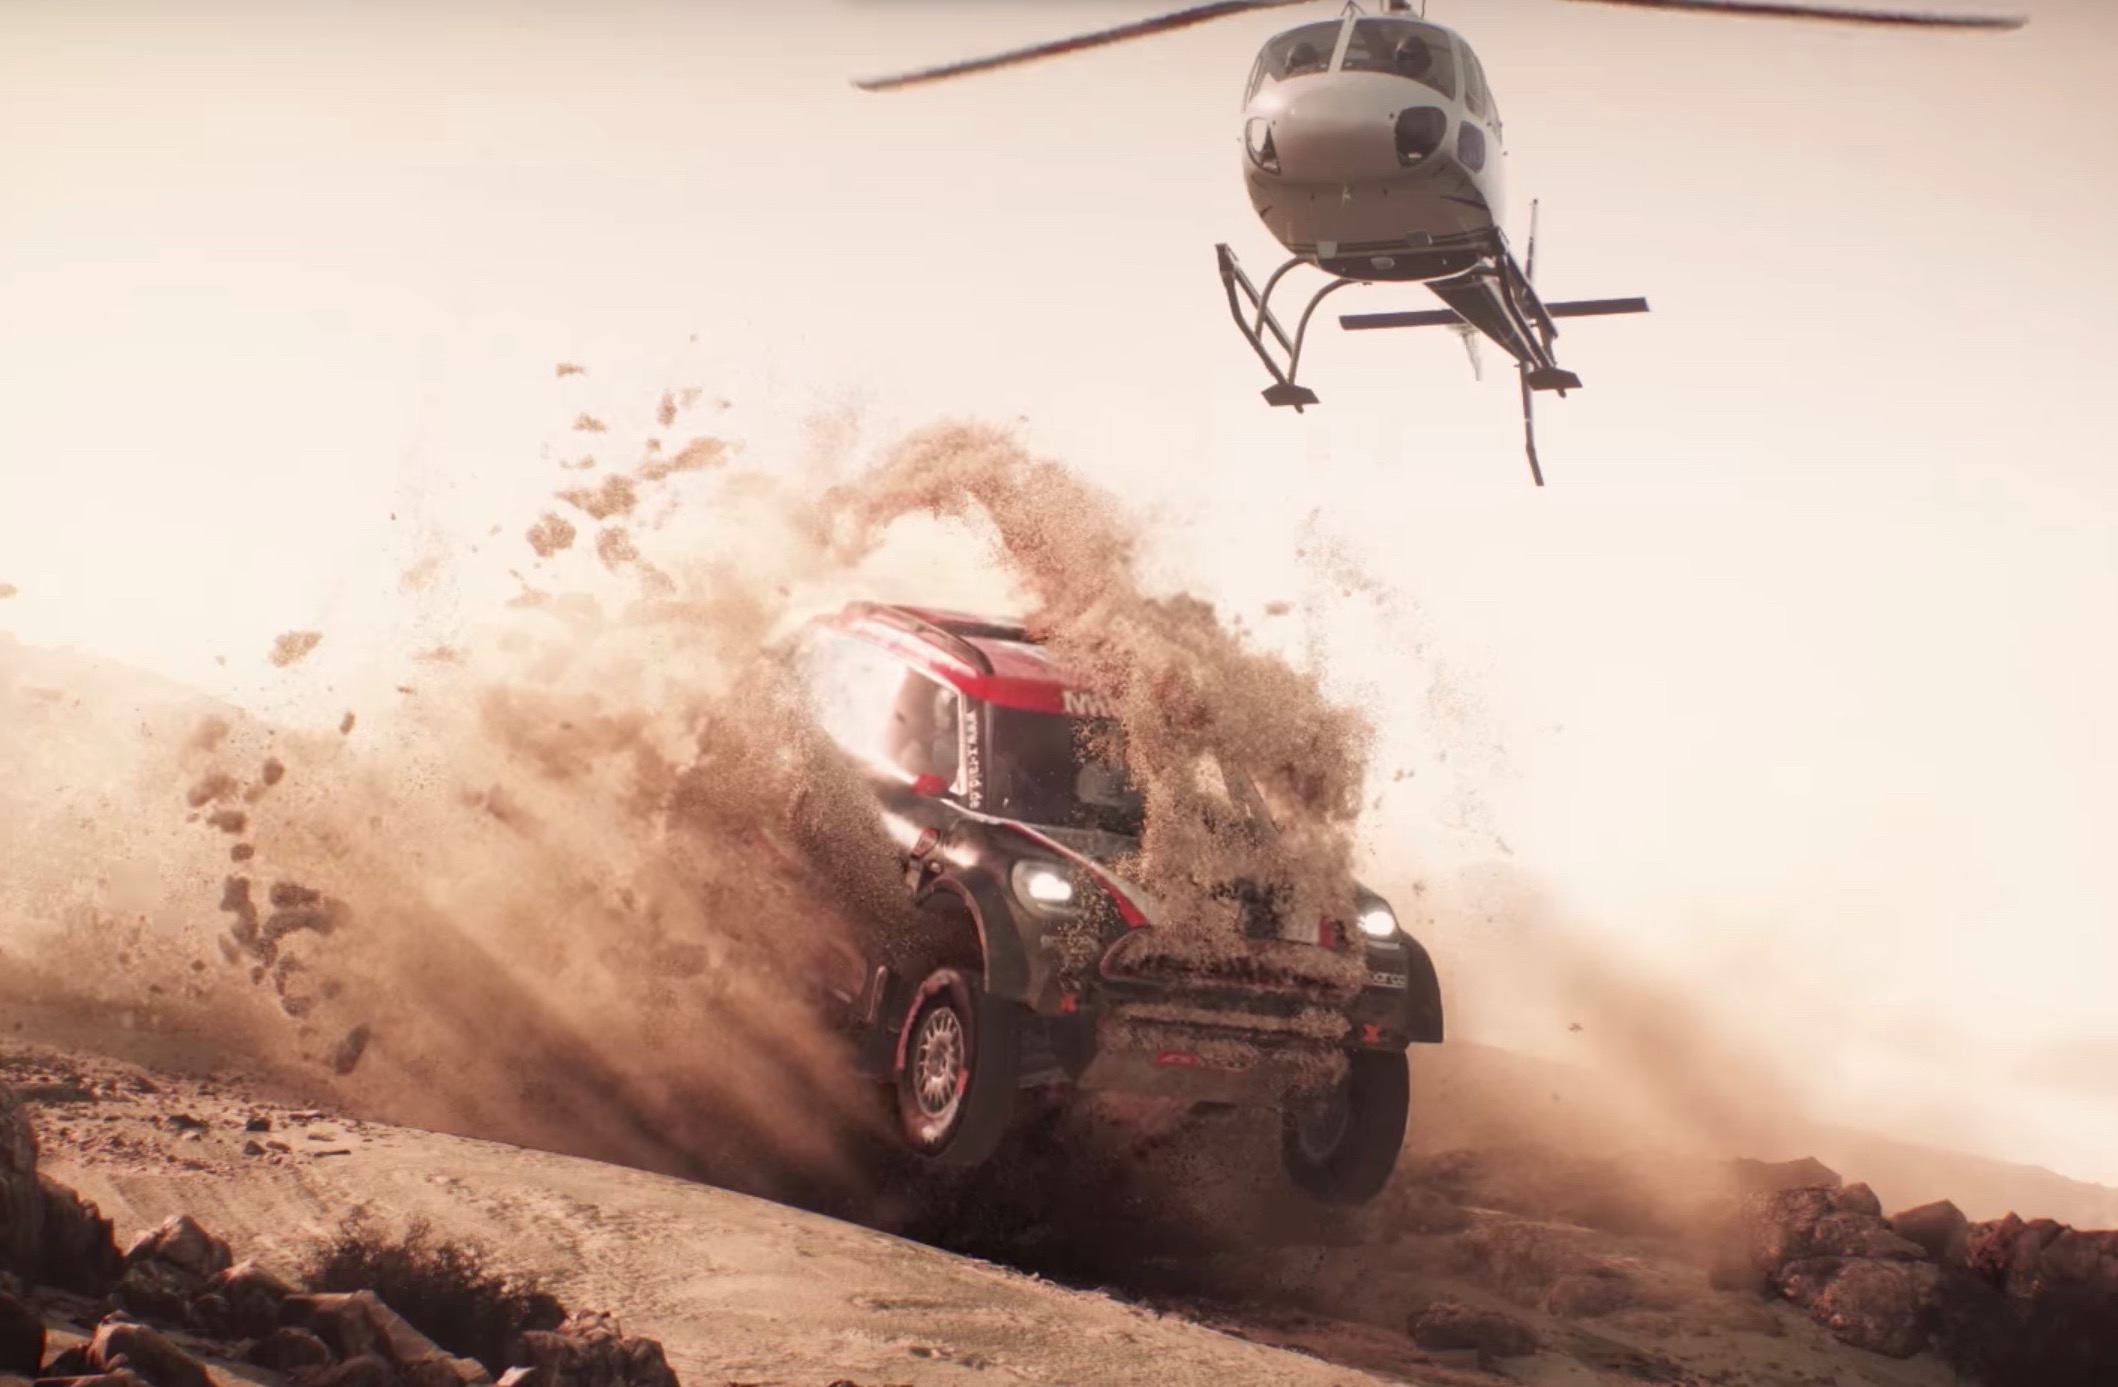 Video: DAKAR 18 trailer looks good, new rally game for PS4